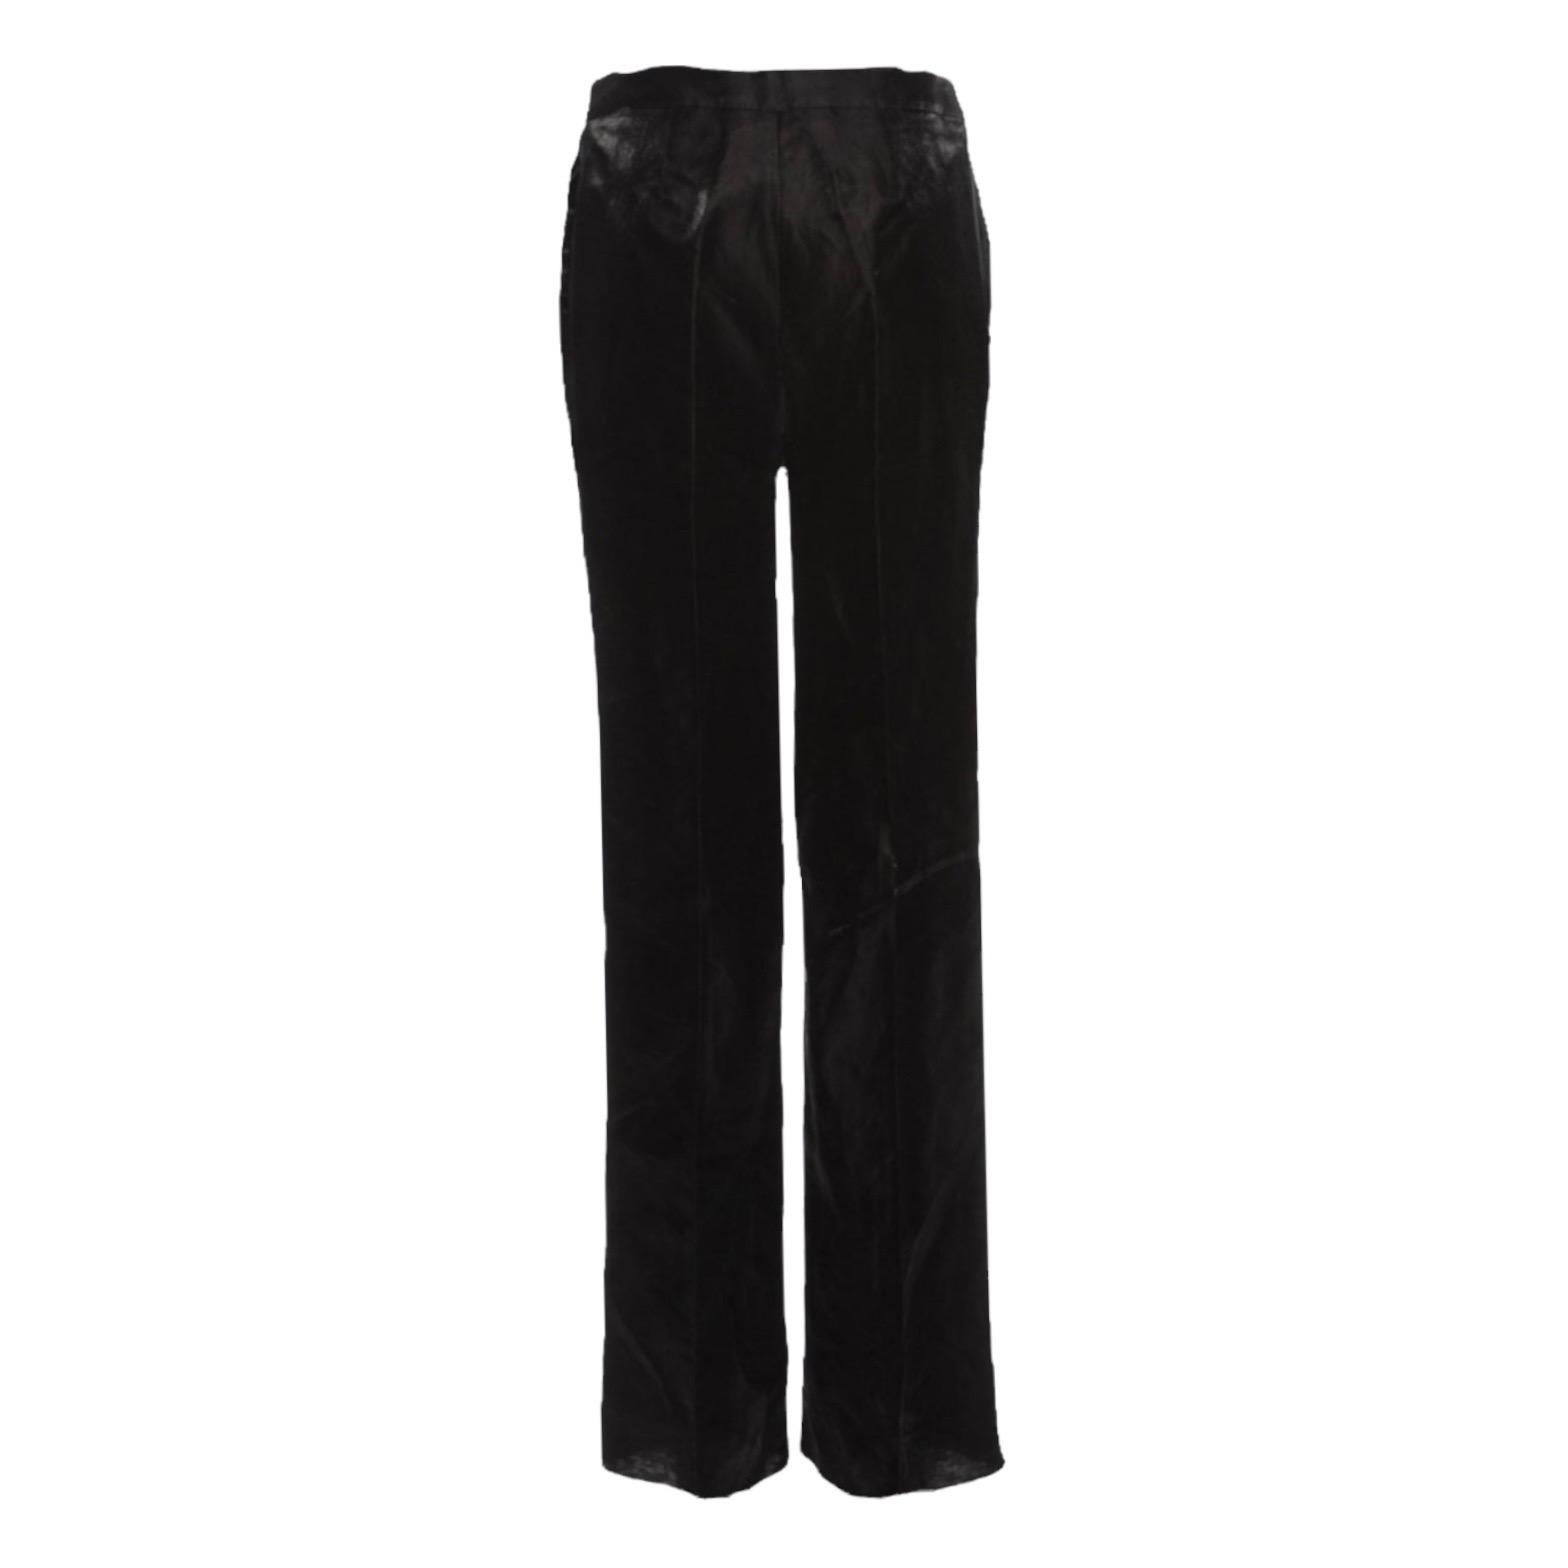 CHANEL Black Shimmering Evening Festive Pants Jacket Suit Tuxedo Smoking 42-44 For Sale 5